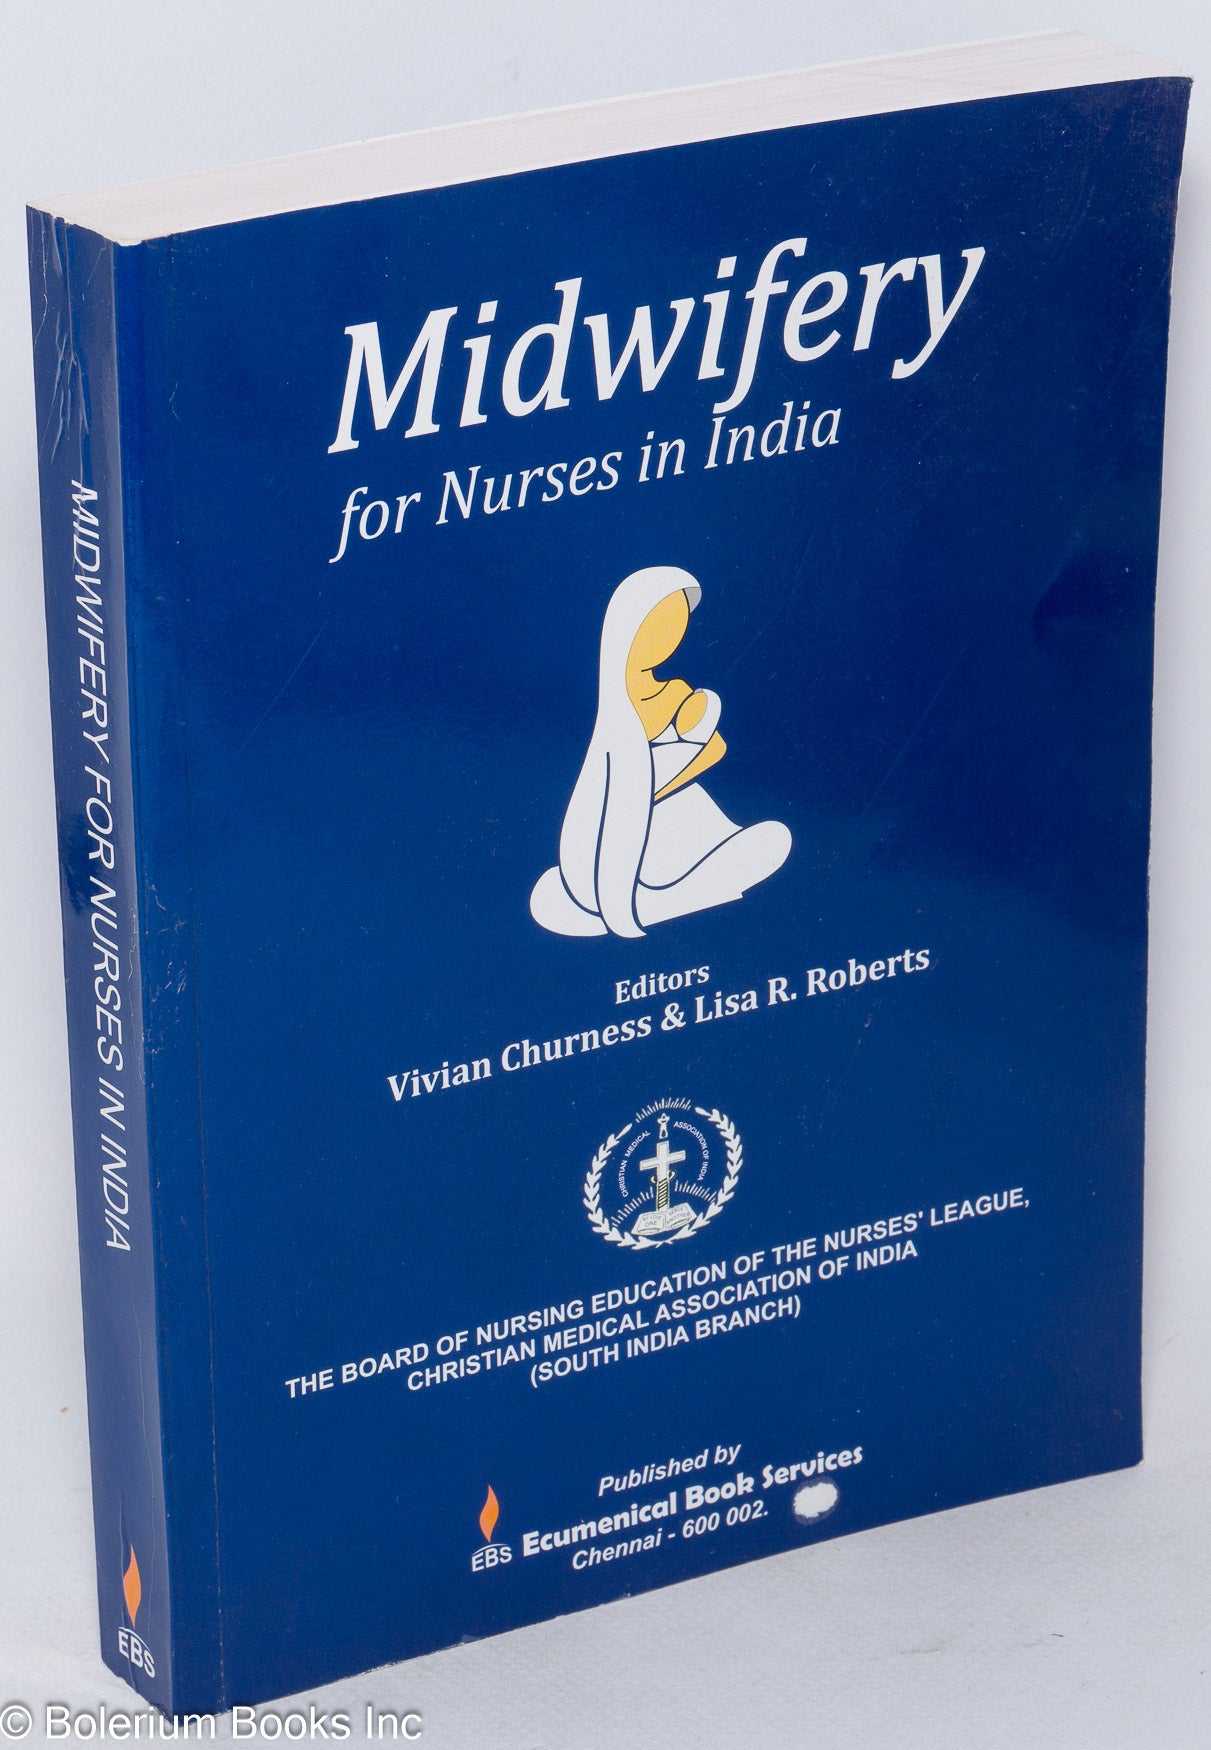 Midwifery for nurses in India Vivan Churness, Lisa Roberts